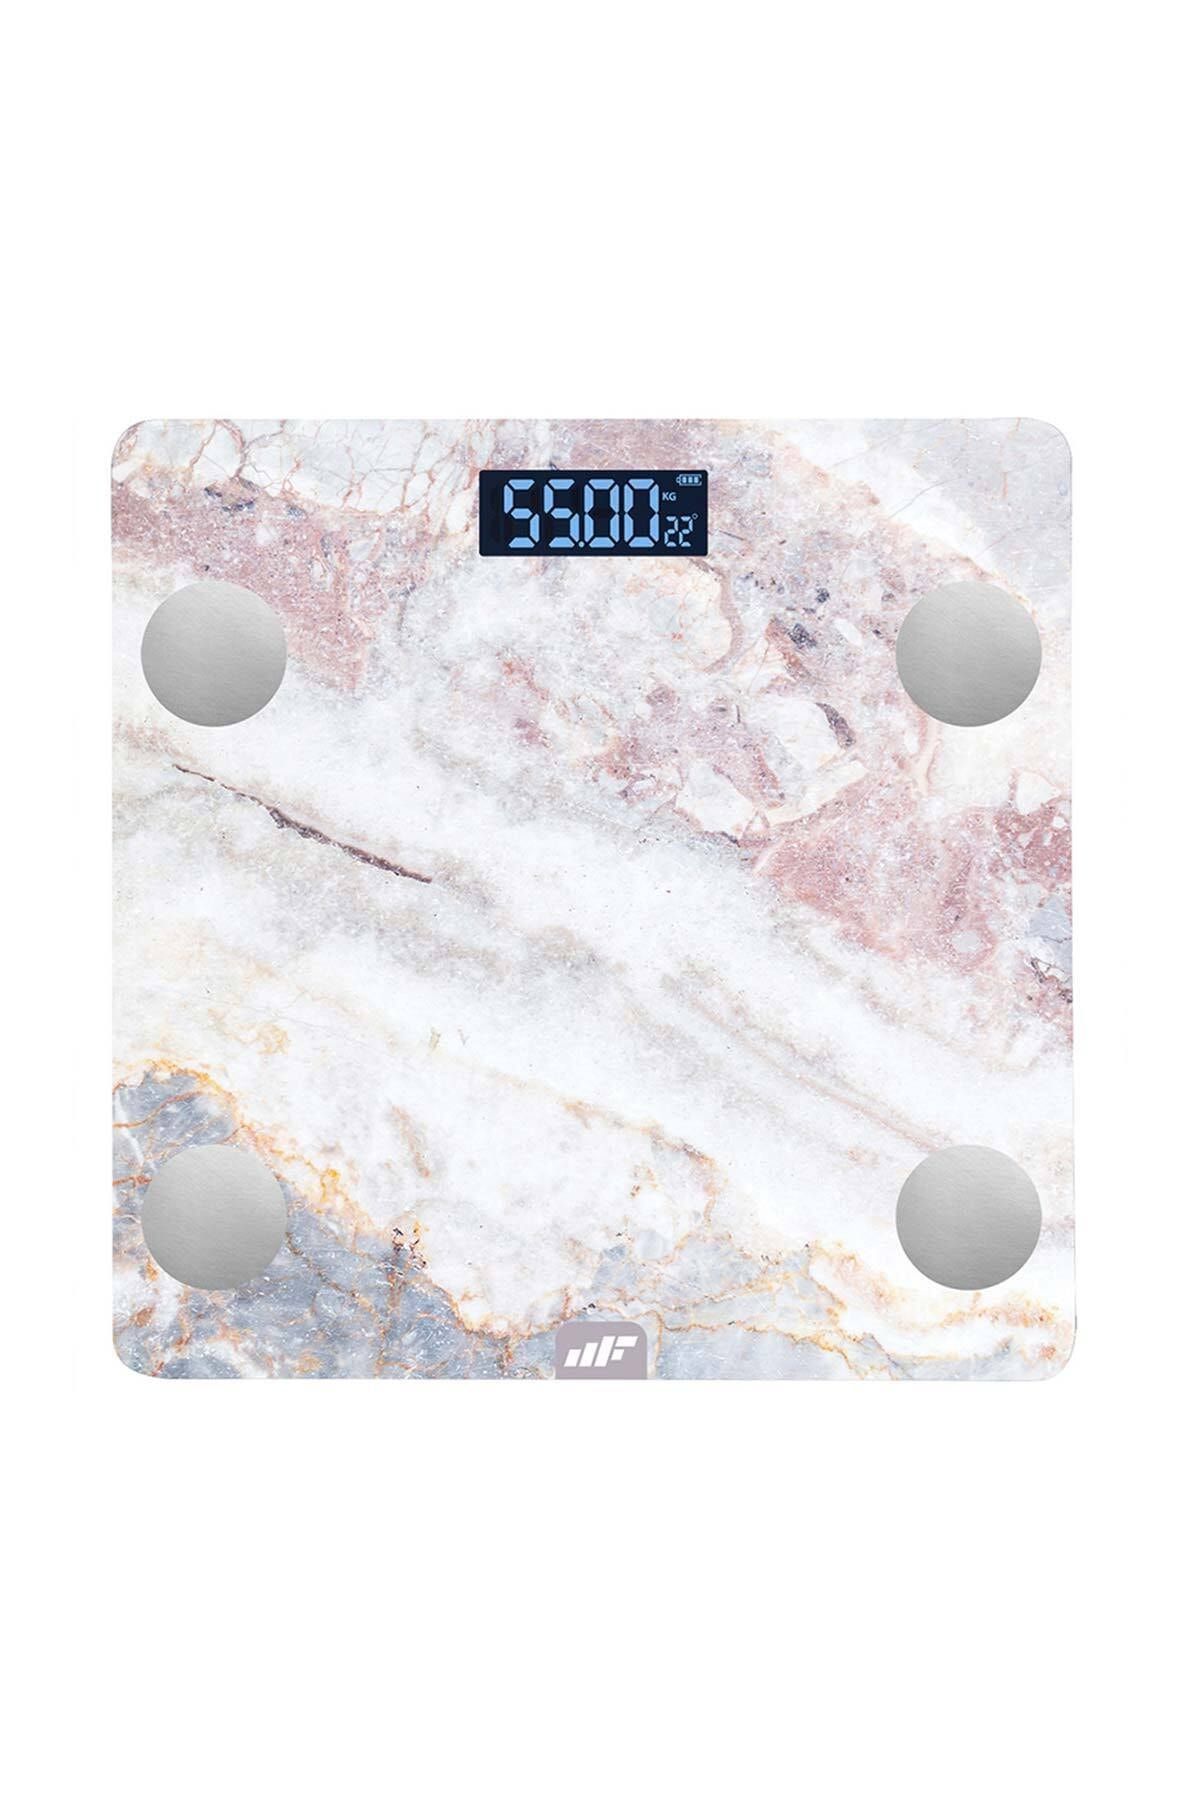 MF PRODUCT Allure 0532 Vücut Analizli Akıllı Tartı Marble Venüs